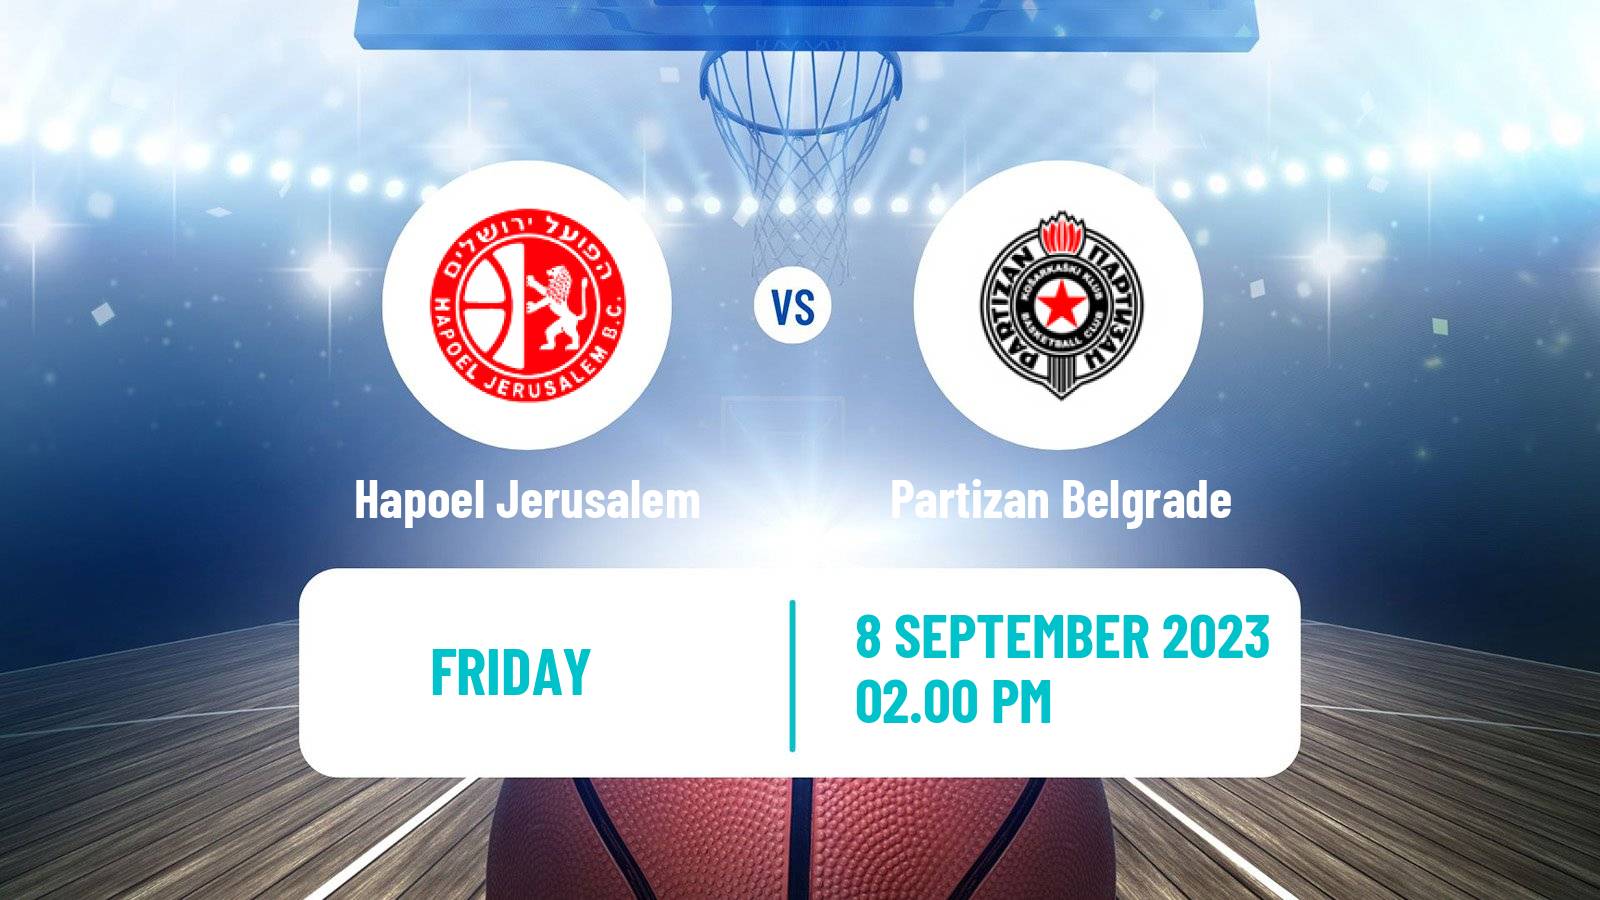 Basketball Club Friendly Basketball Hapoel Jerusalem - Partizan Belgrade